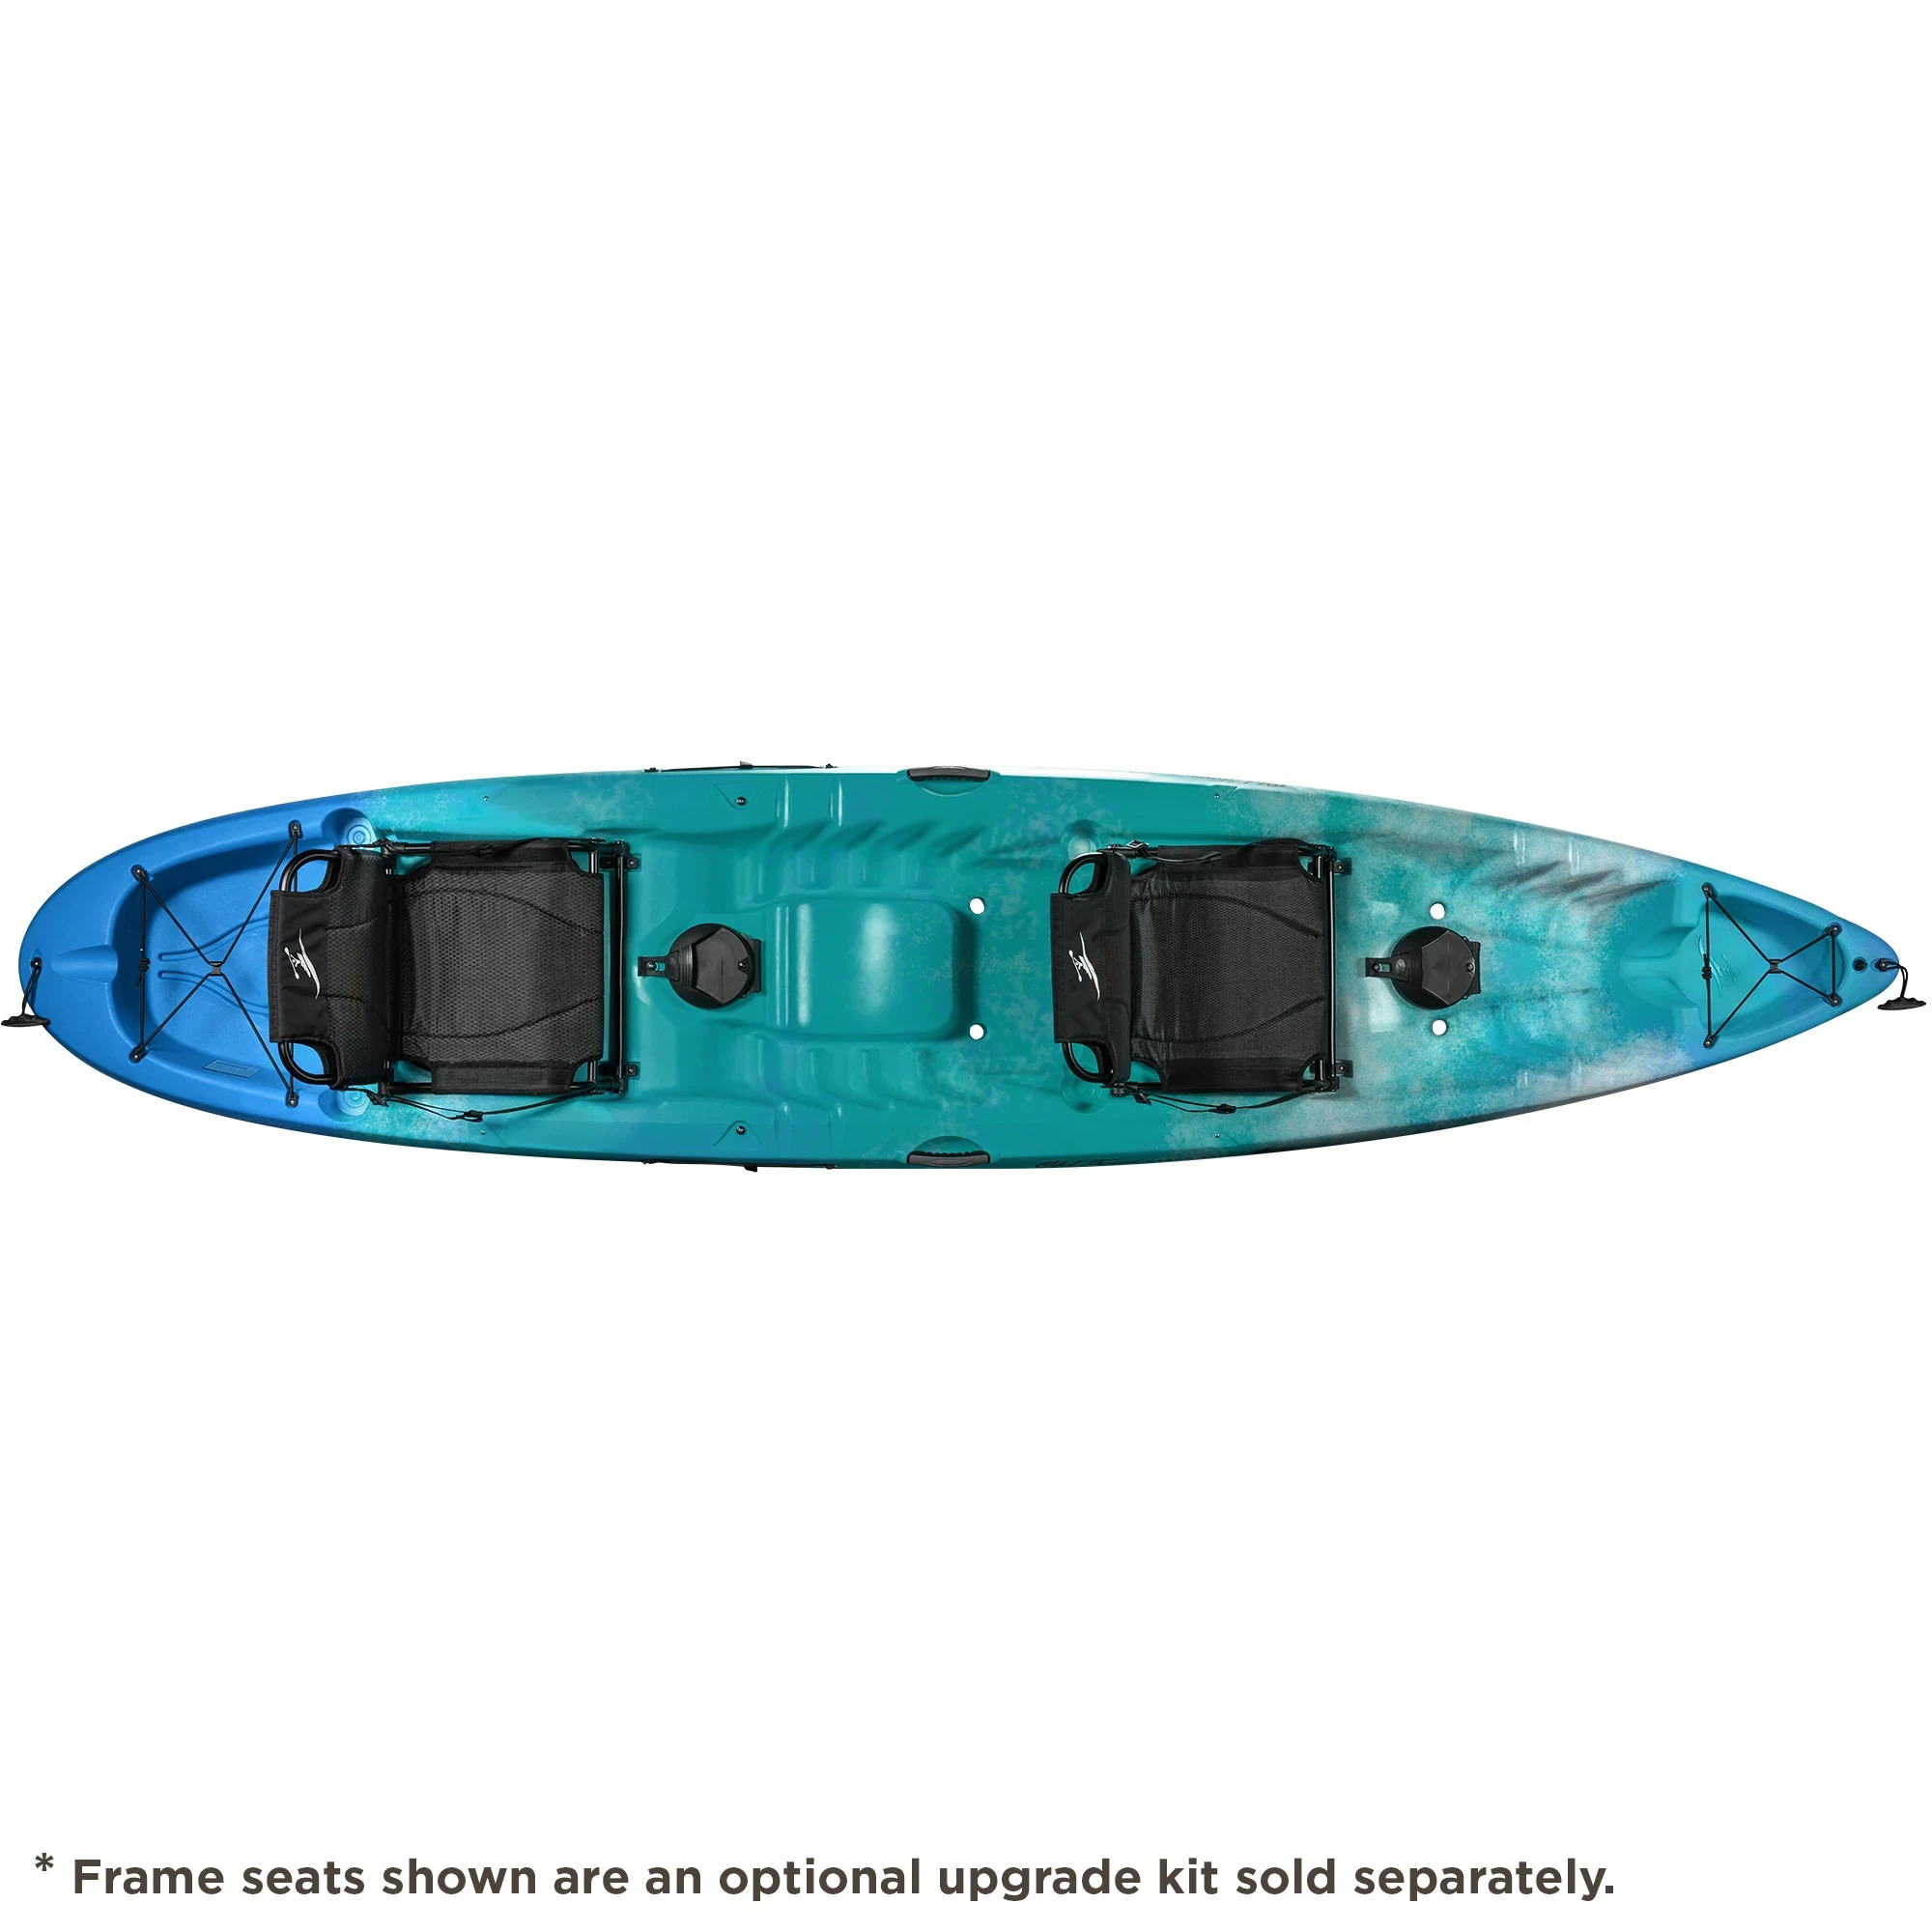 Ocean Kayak Malibu Two XL - Seaglass - Top View with frame seat upgrade